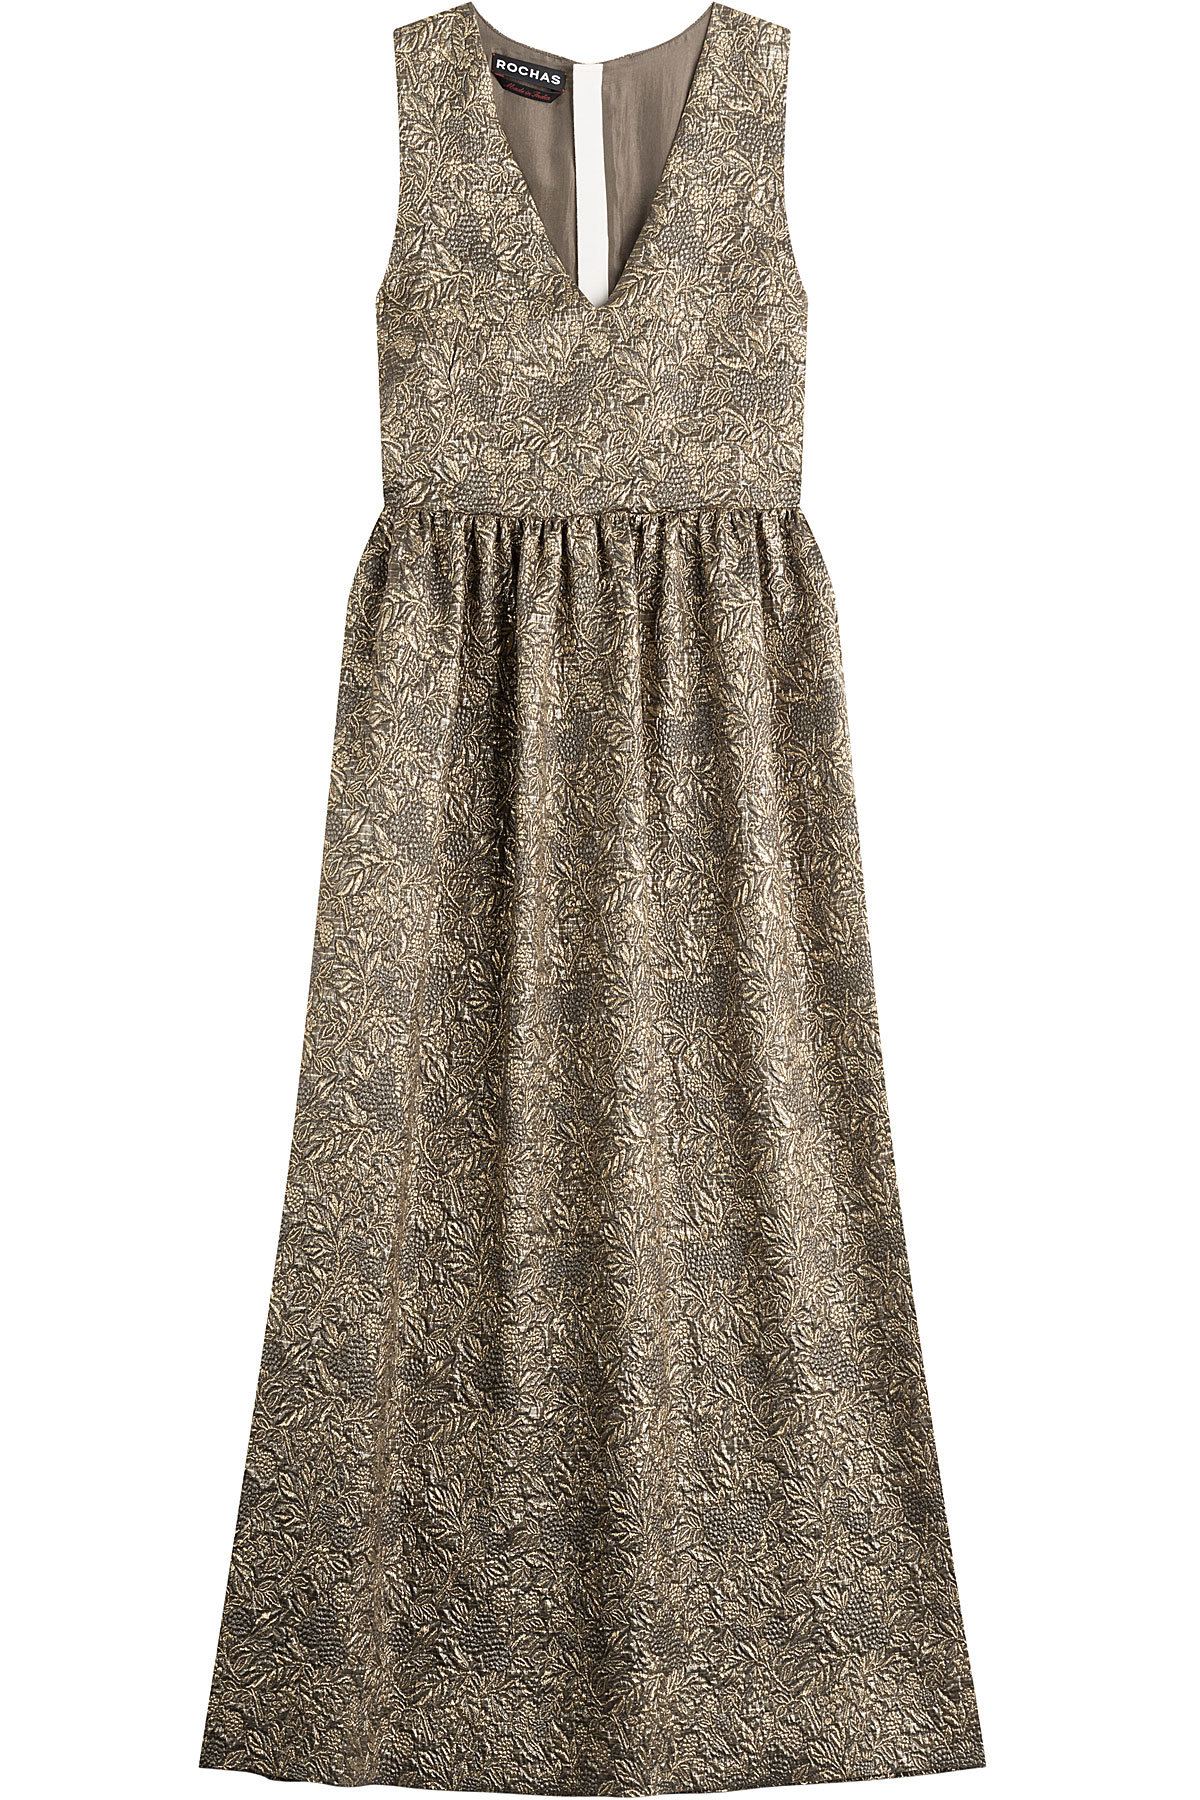 Rochas - Jacquard Dress with Silk